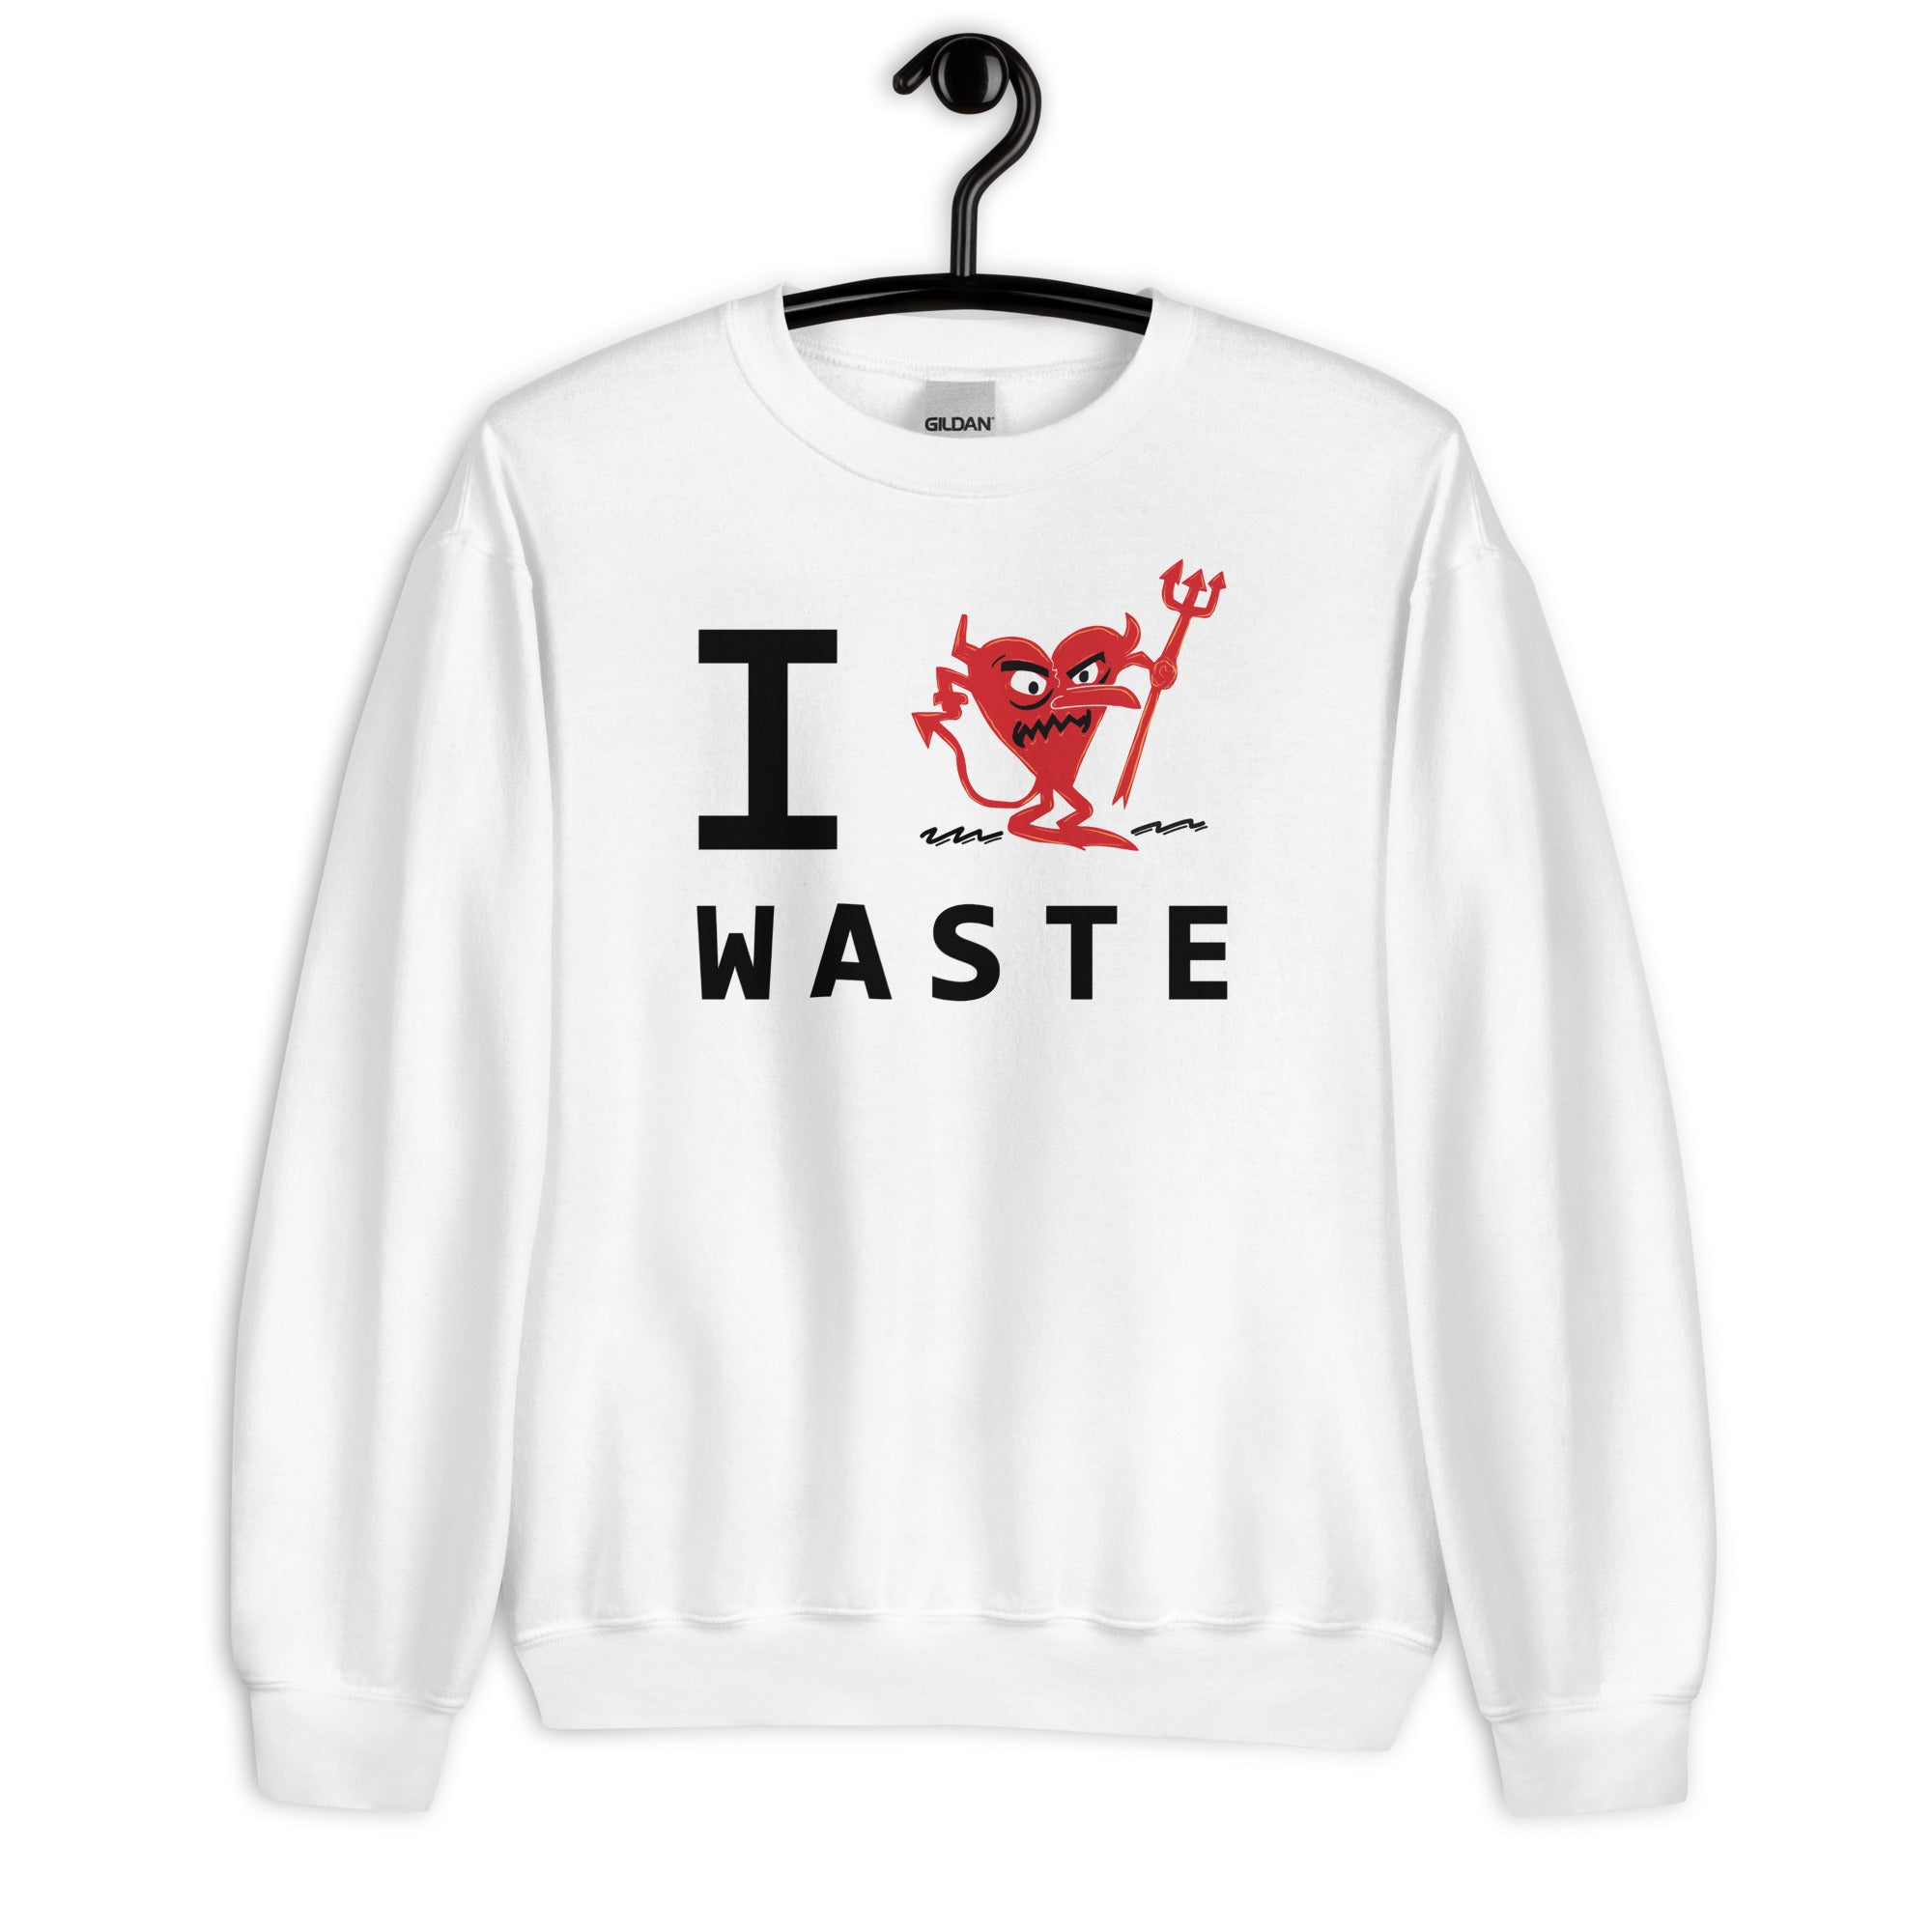 WASTE Unisex Sweatshirt